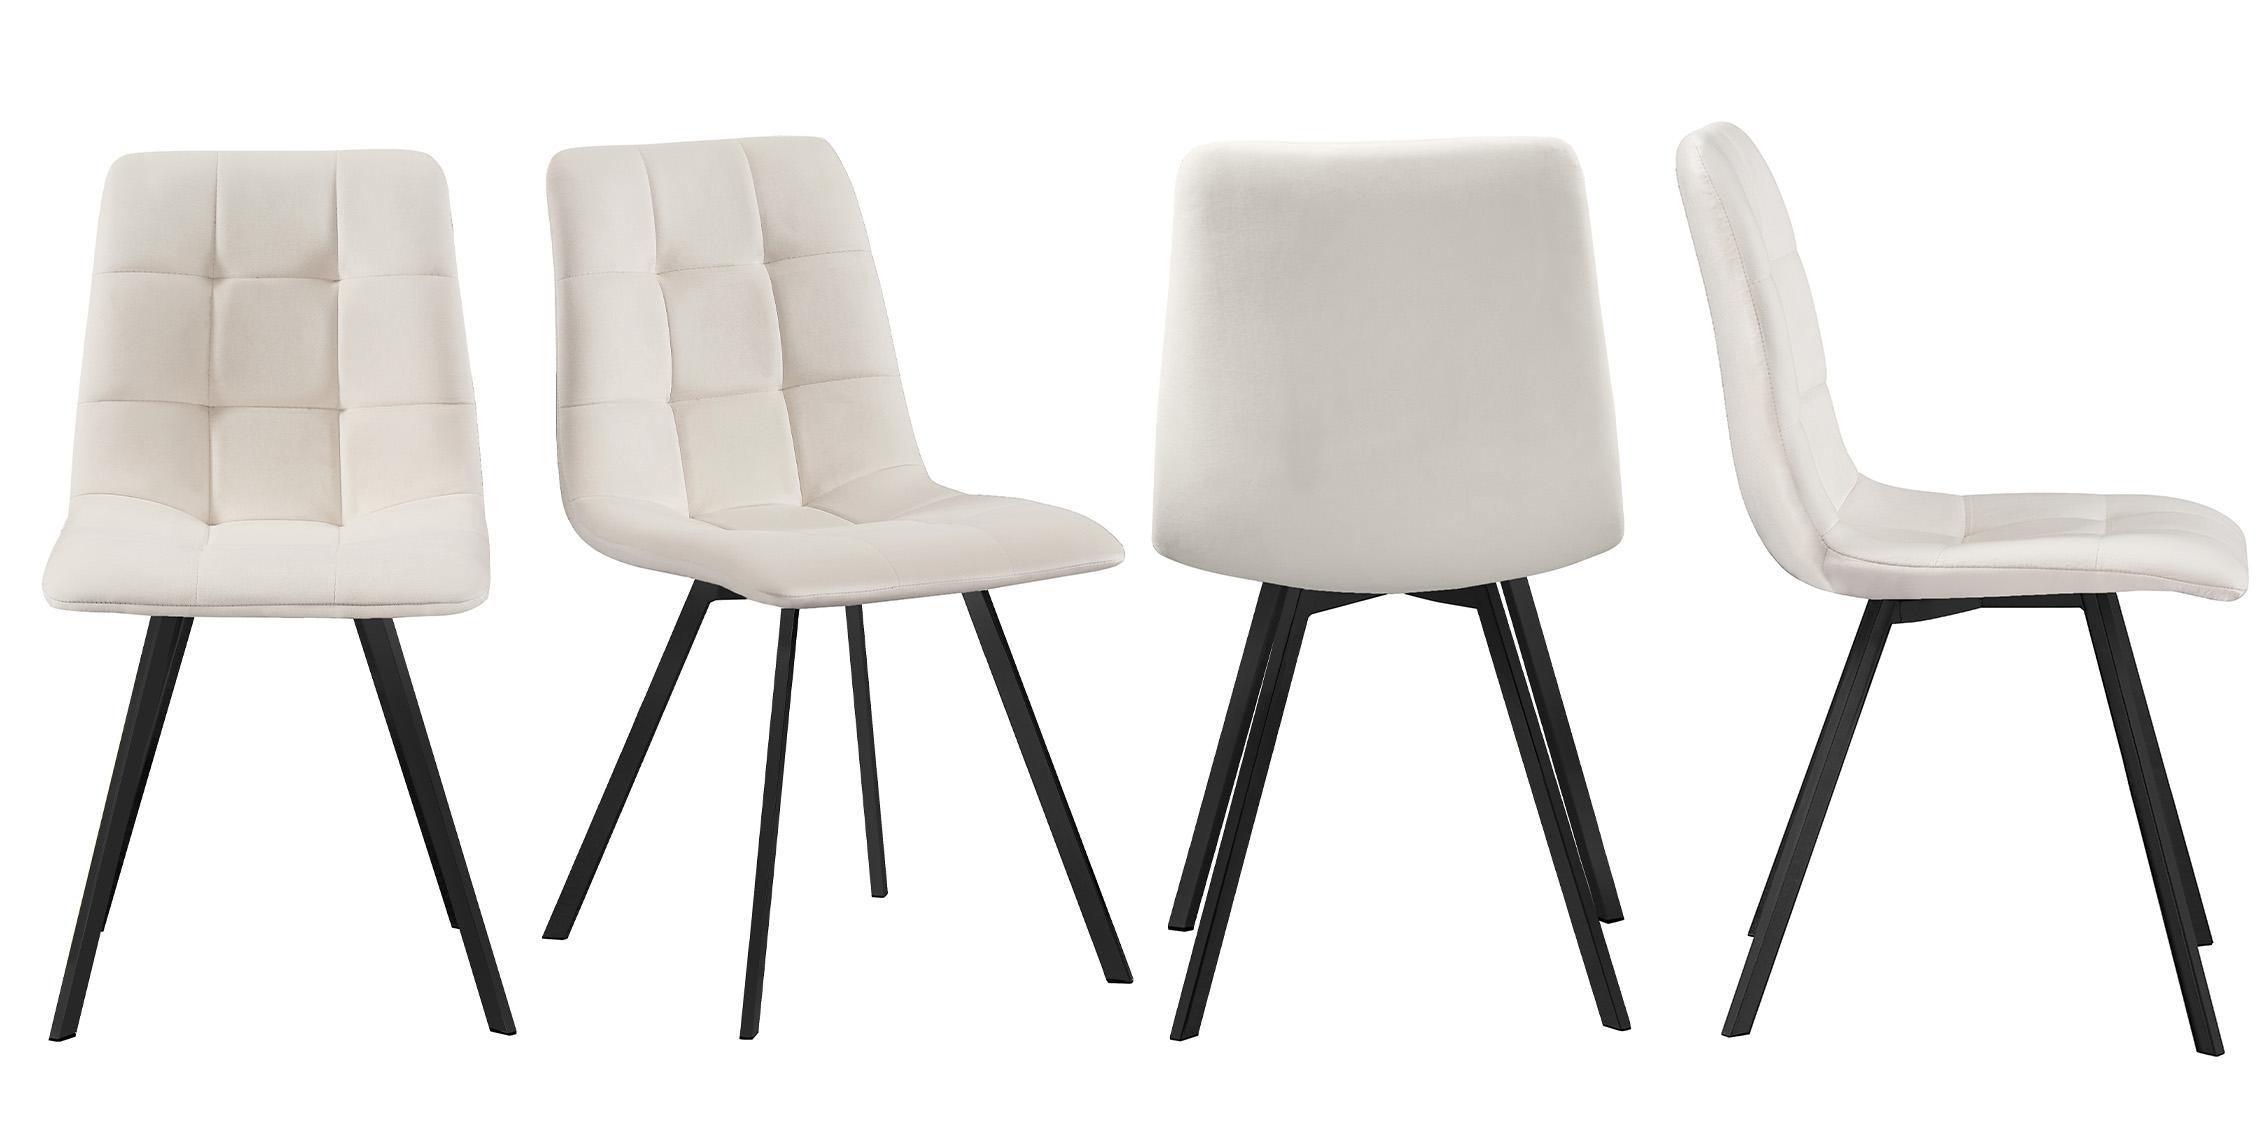 Contemporary, Modern Dining Chair Set ANNIE 981Cream-C 981Cream-C-Set-4 in Cream, Black 